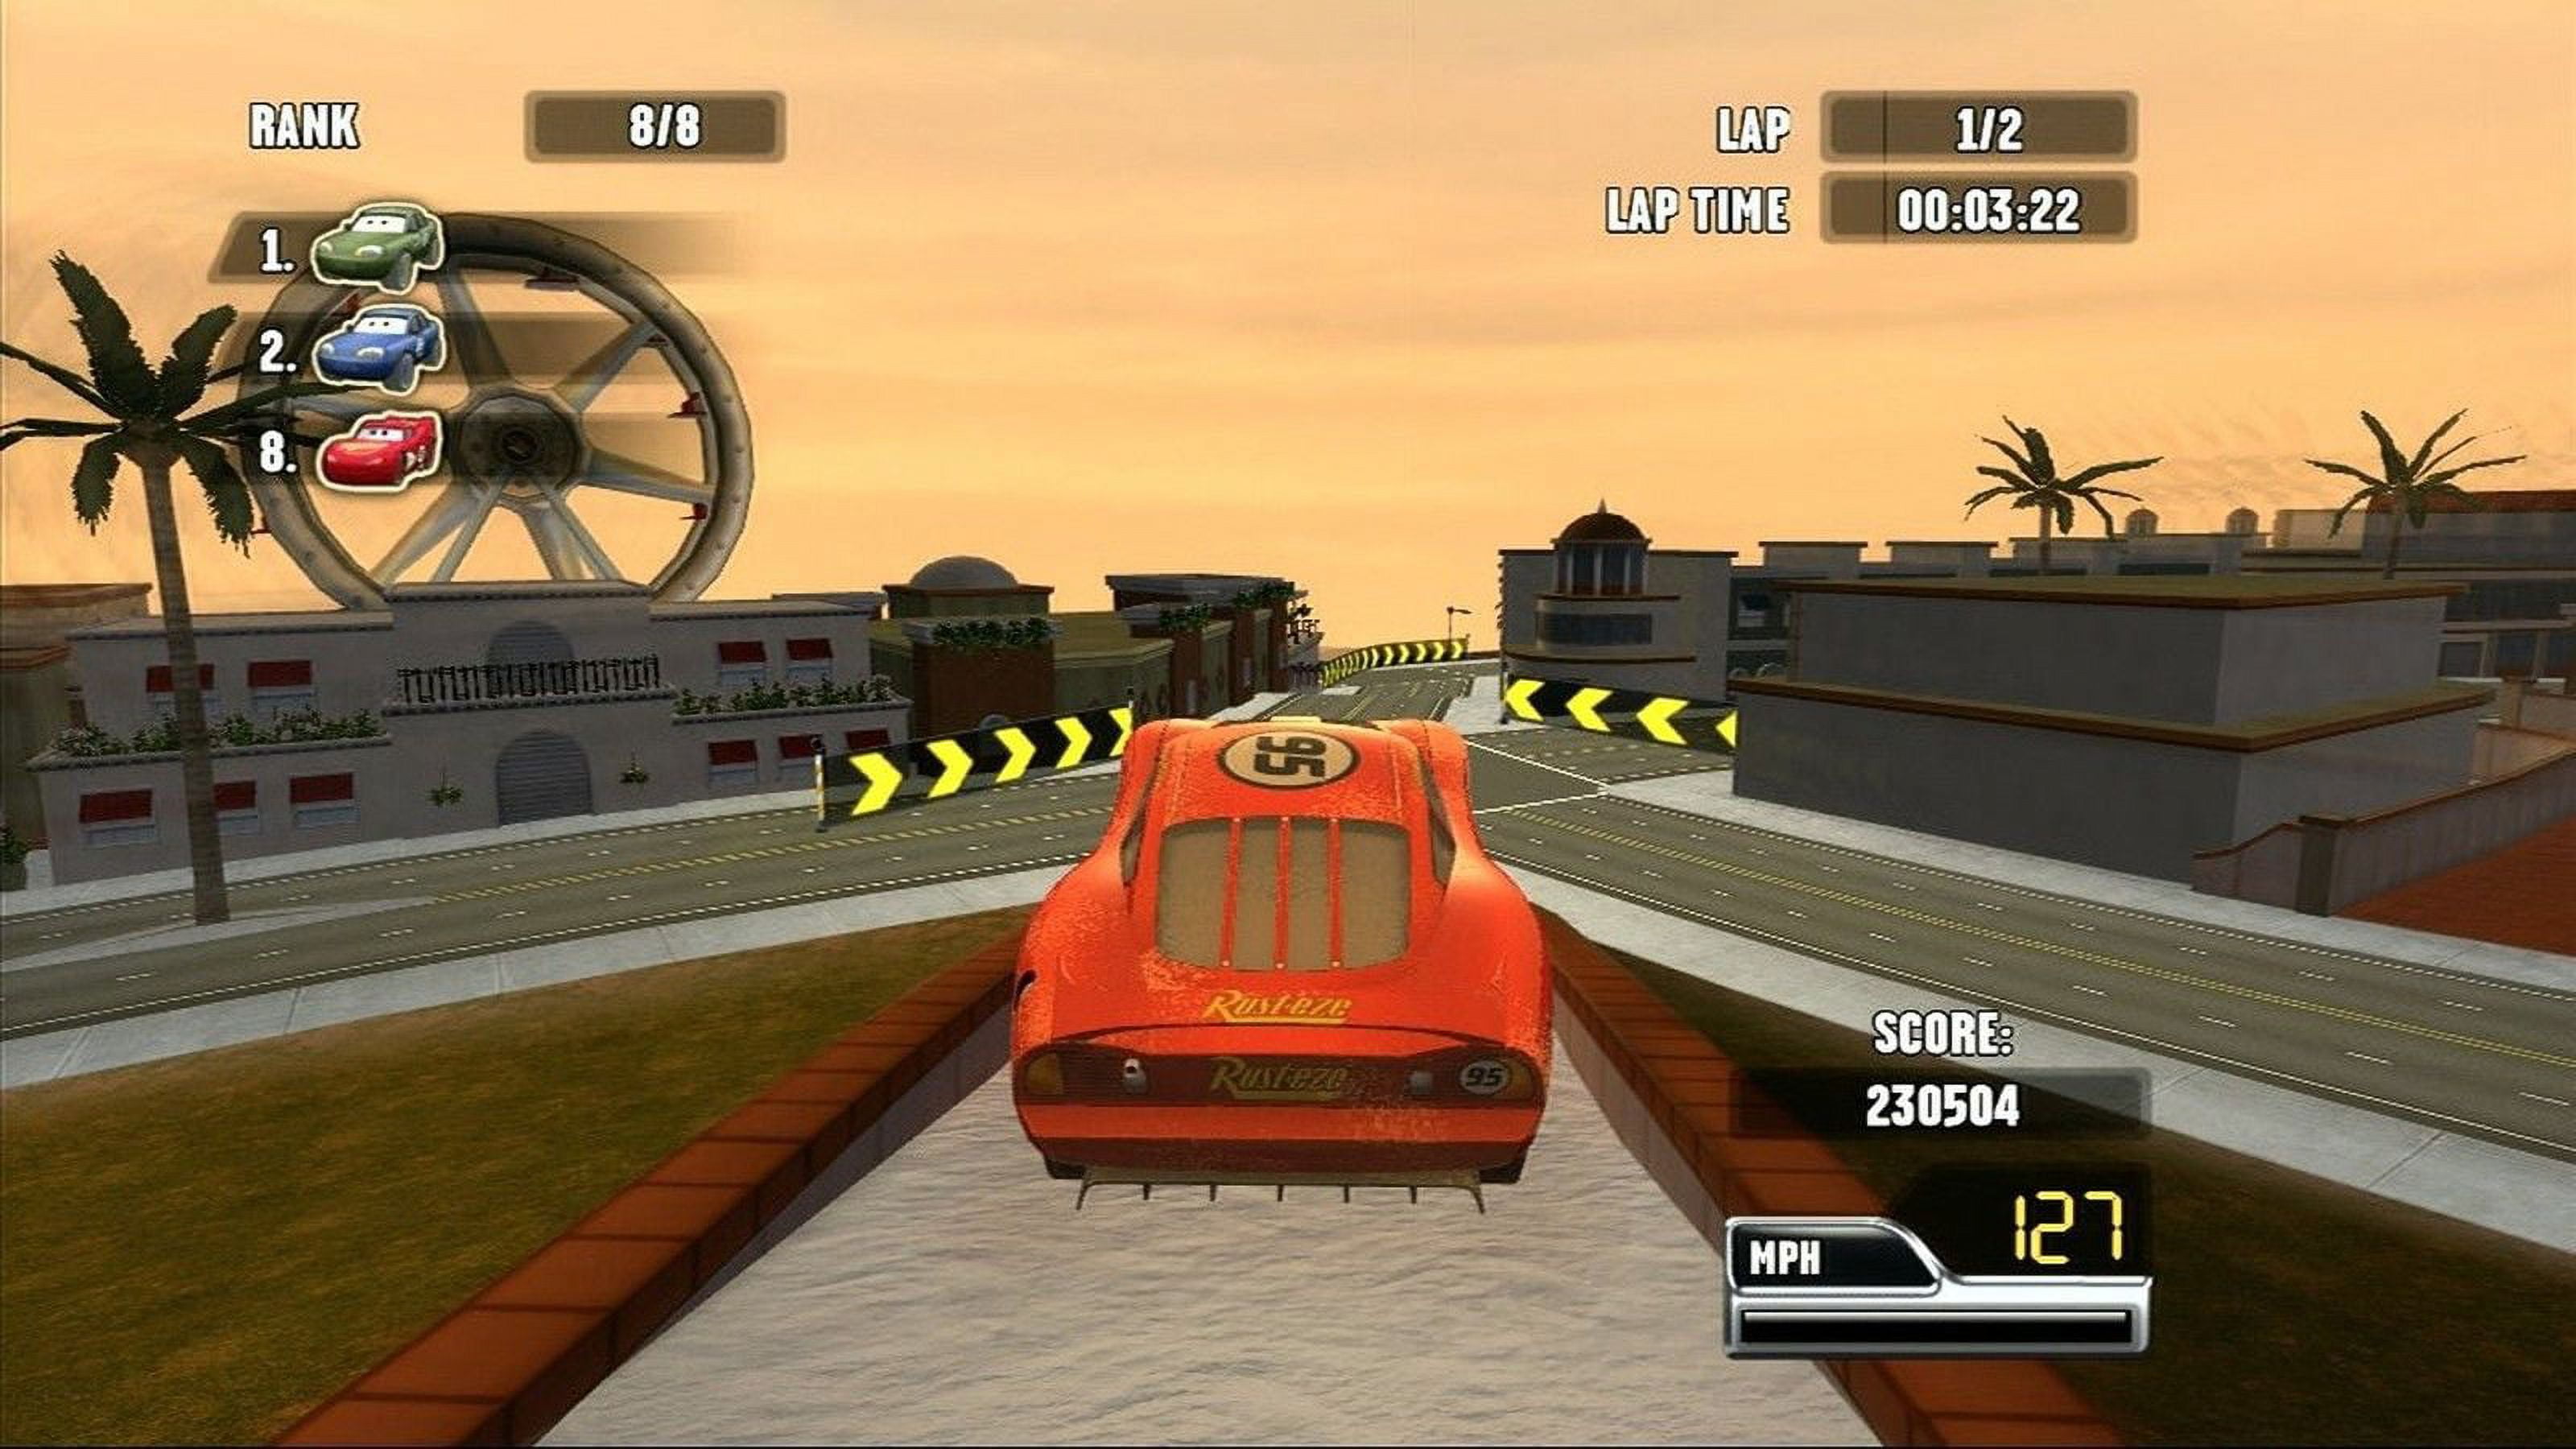 Cars Race-O-Rama - Gameplay [PPSSPP/PSP] 